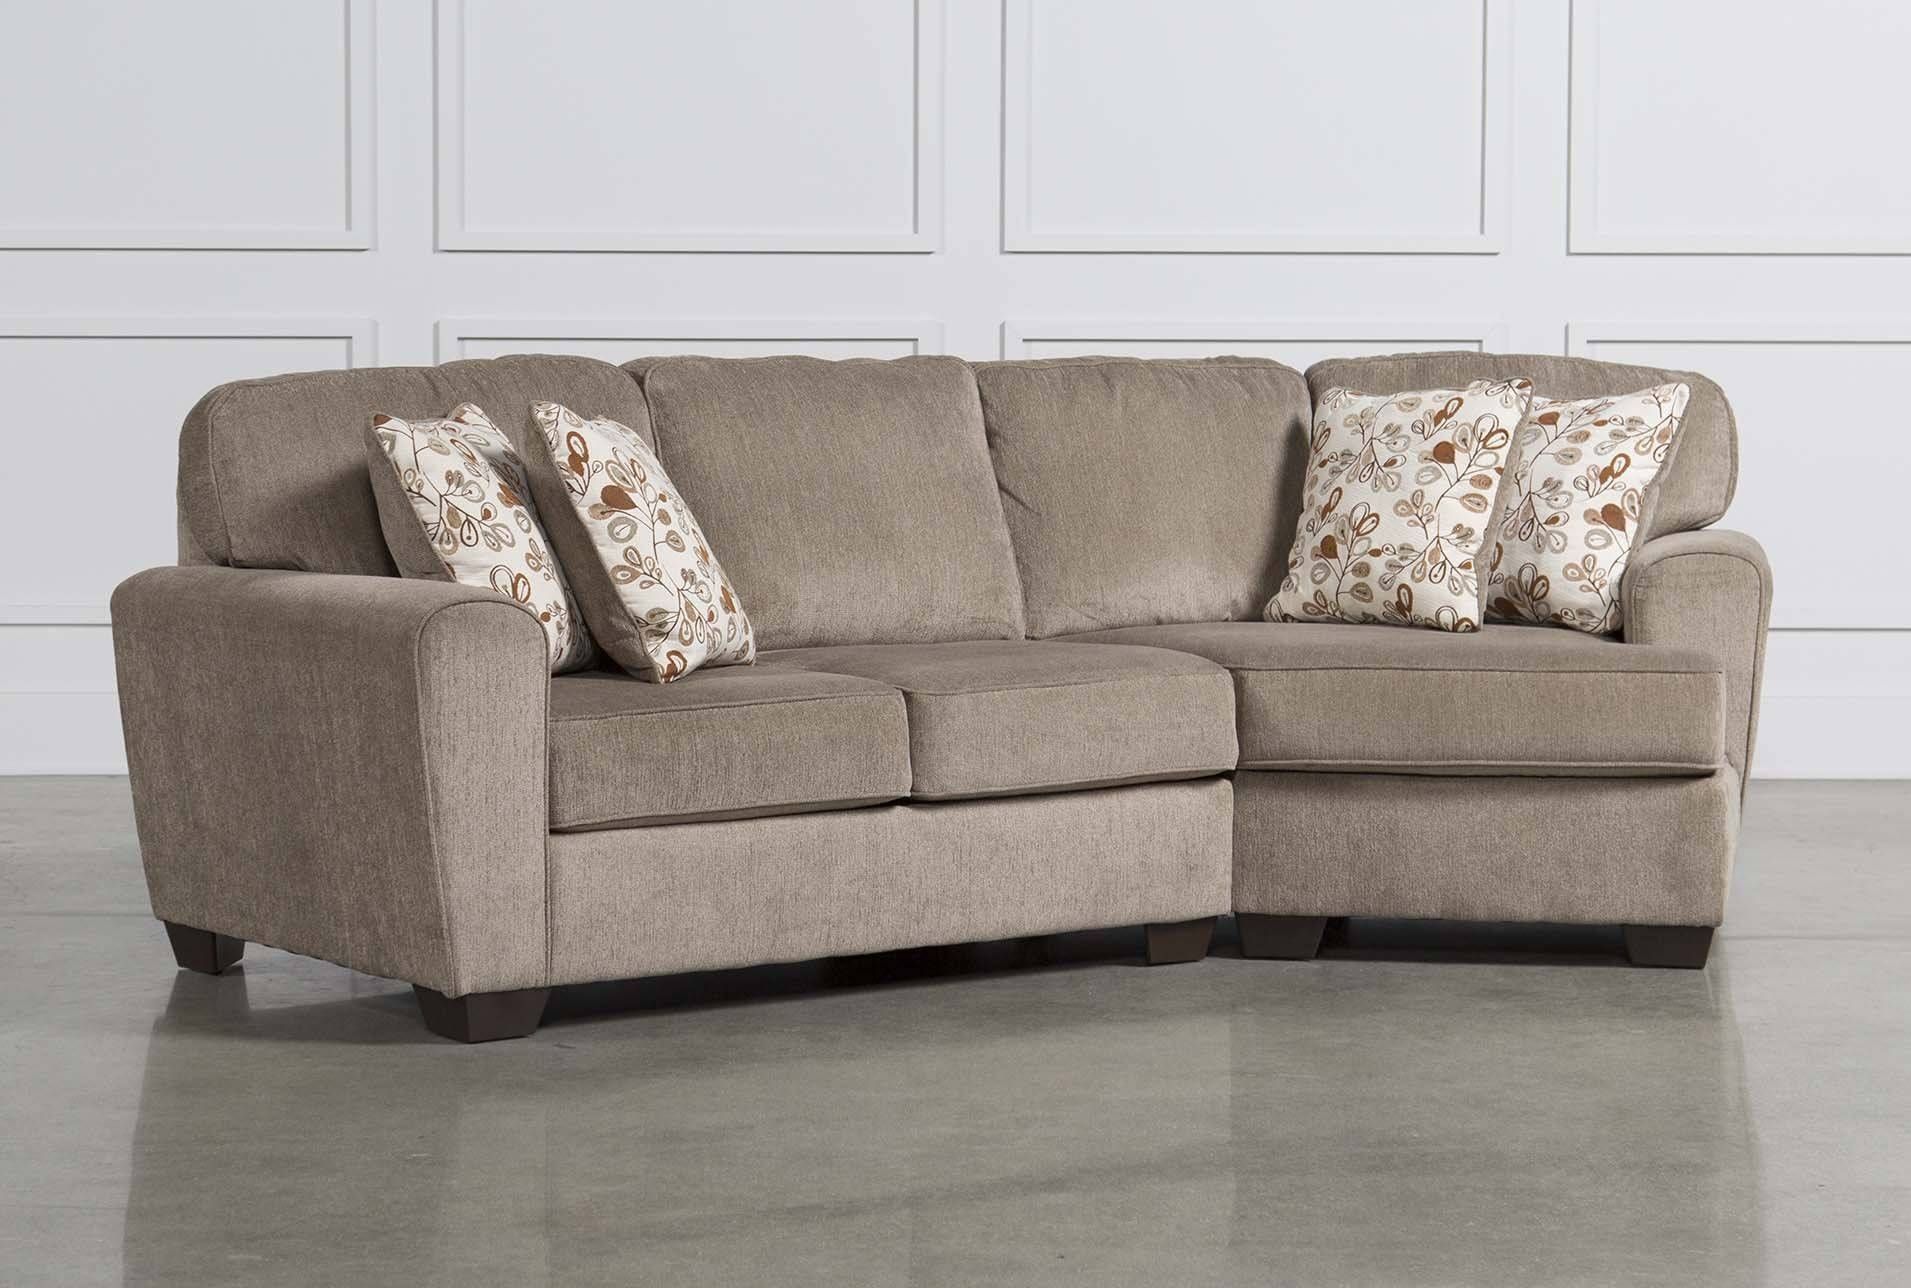 Havertys Leather Sleeper Sofa Trend